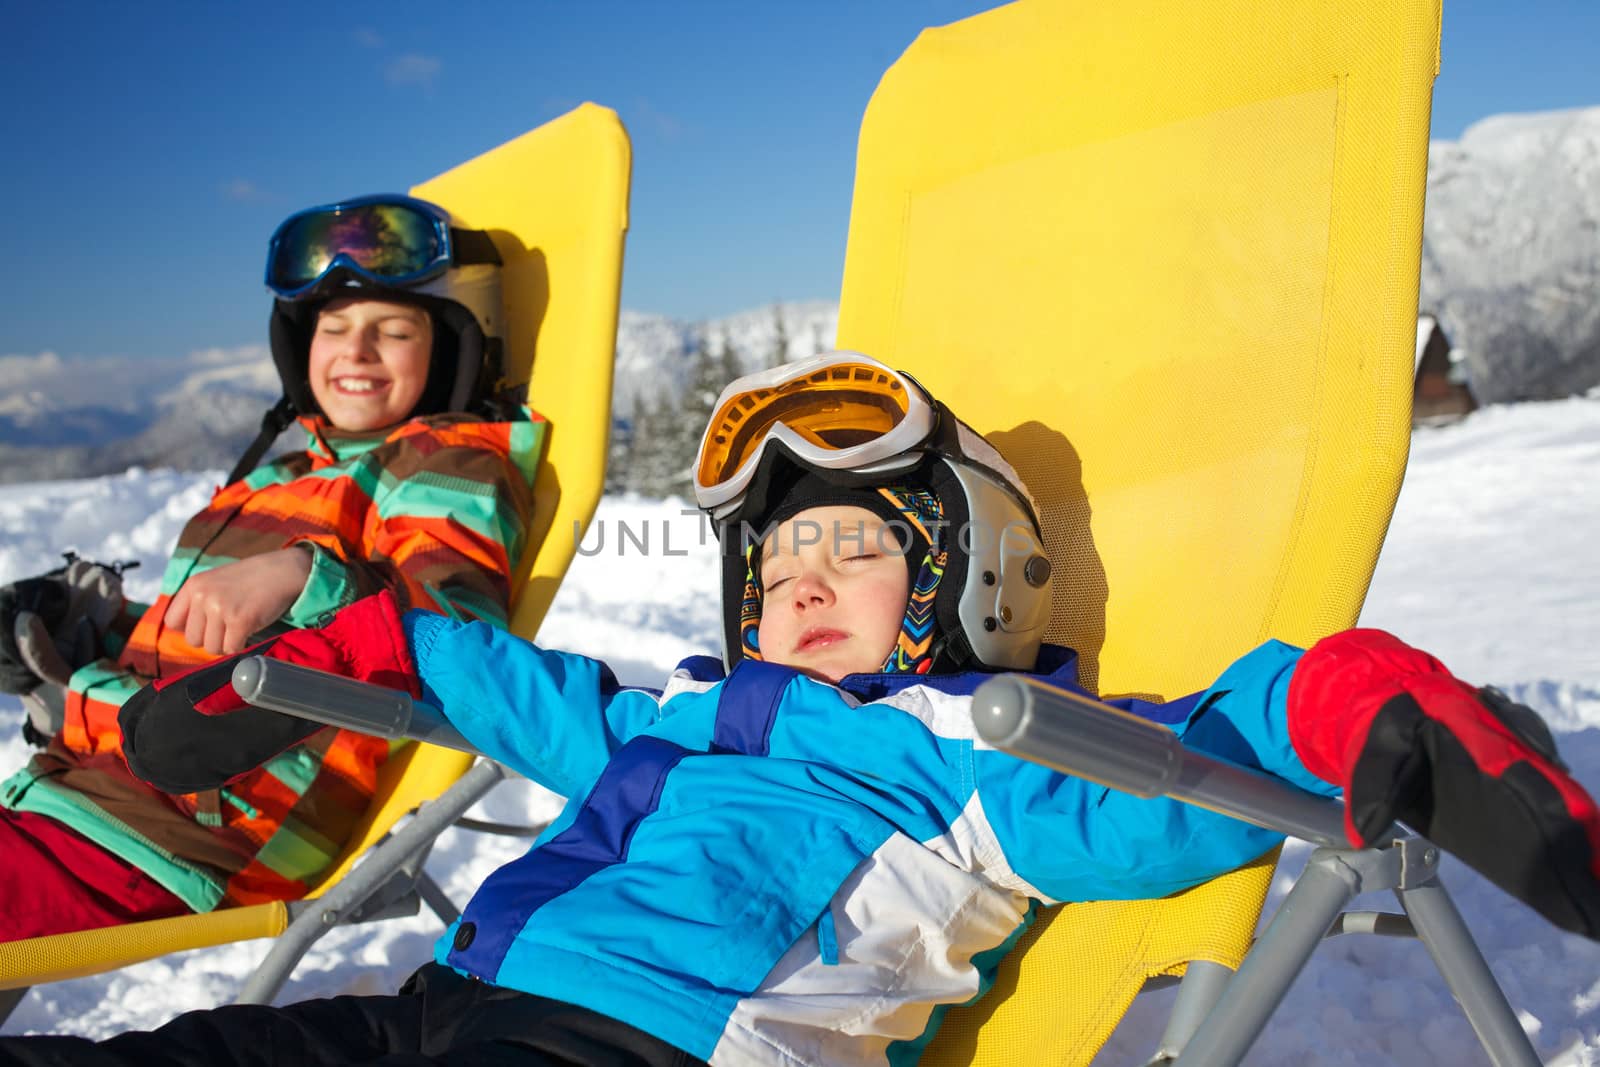 Winter, ski, sun and fun - portrait of kids in winter resort resting in the deck chair